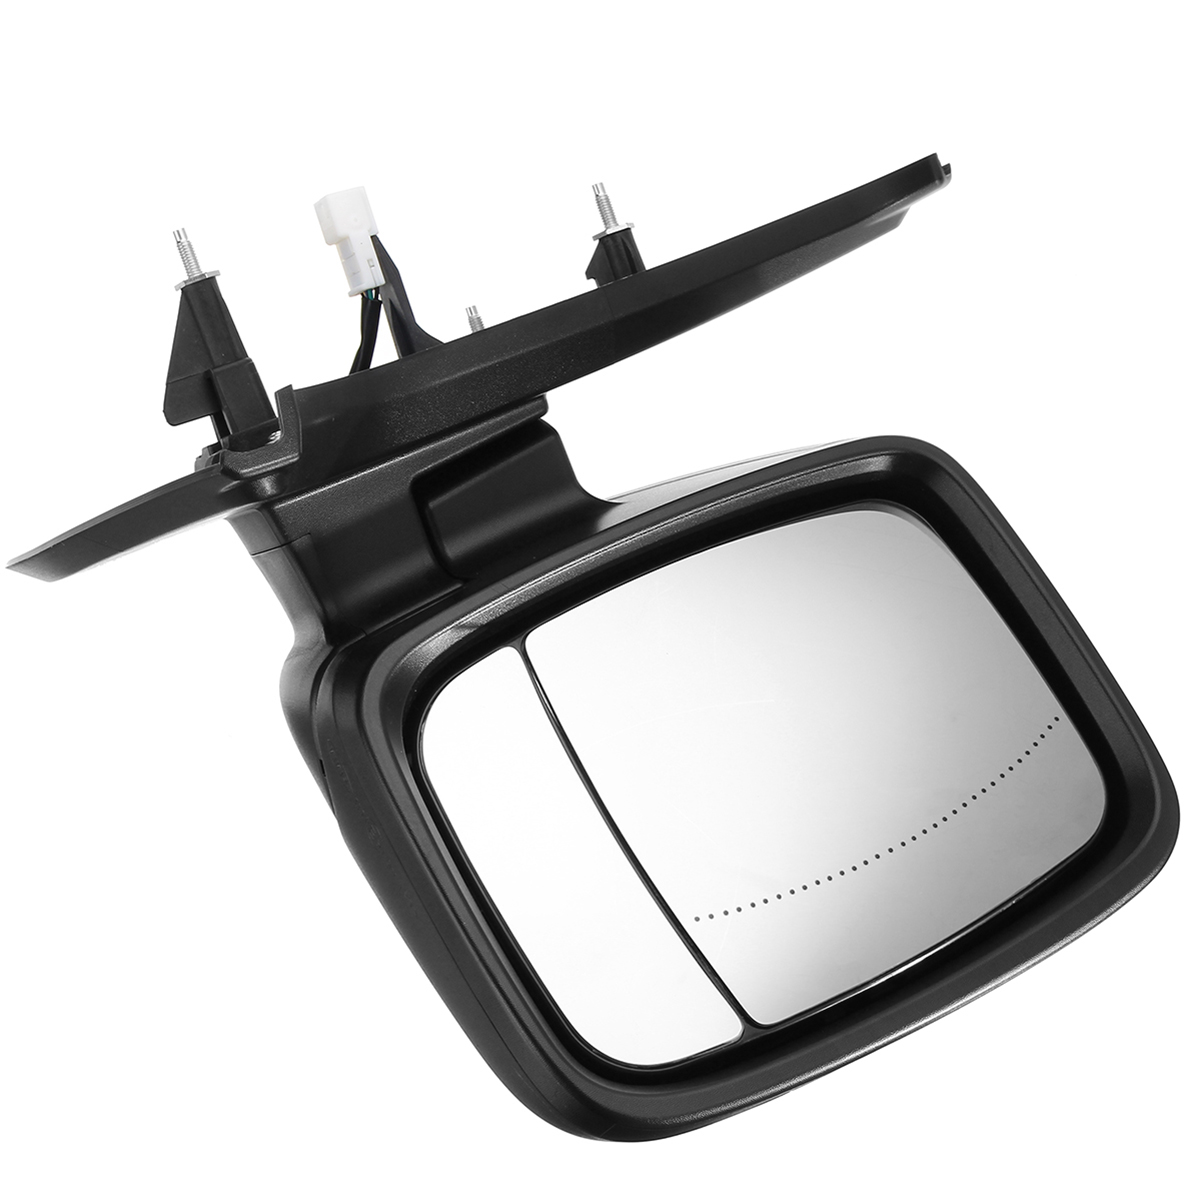 Car Right Electric Black Wing Mirror for Vauxhall Vivaro Renault Trafic Van 2015-18